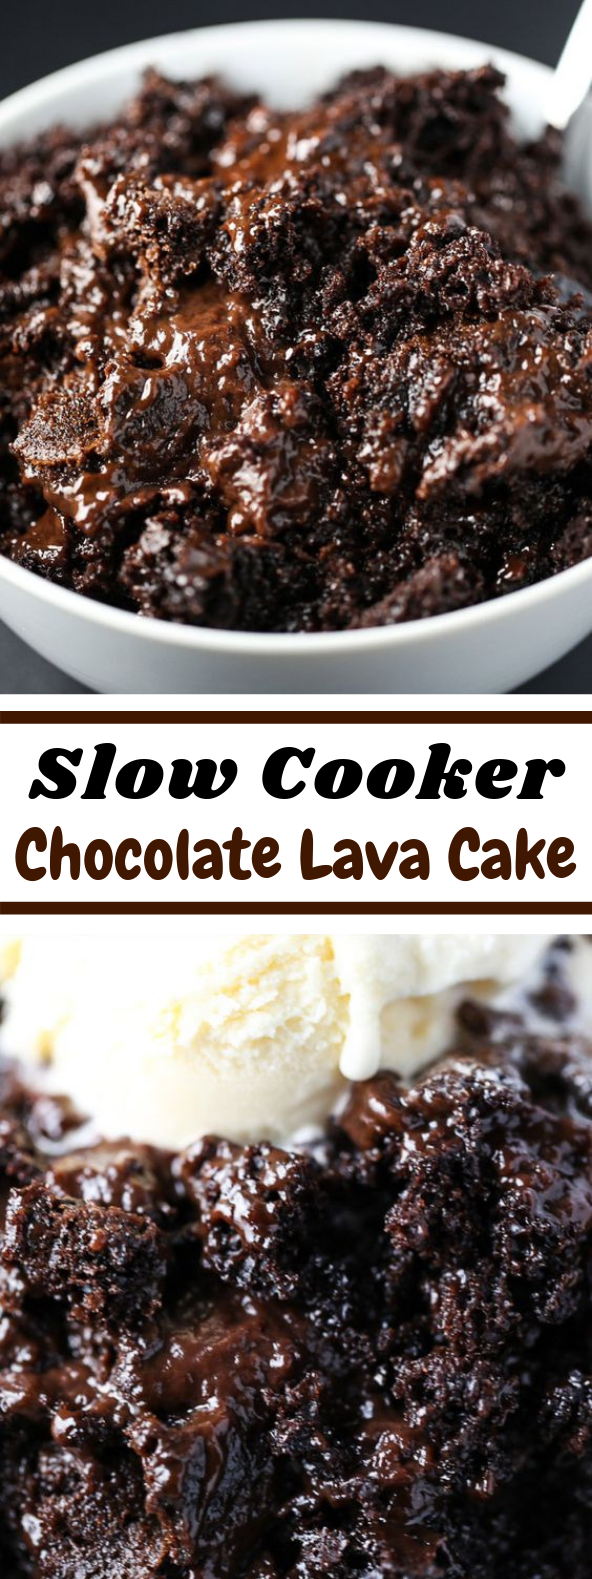 SLOW COOKER CHOCOLATE LAVA CAKE #dessert #yummychocolate